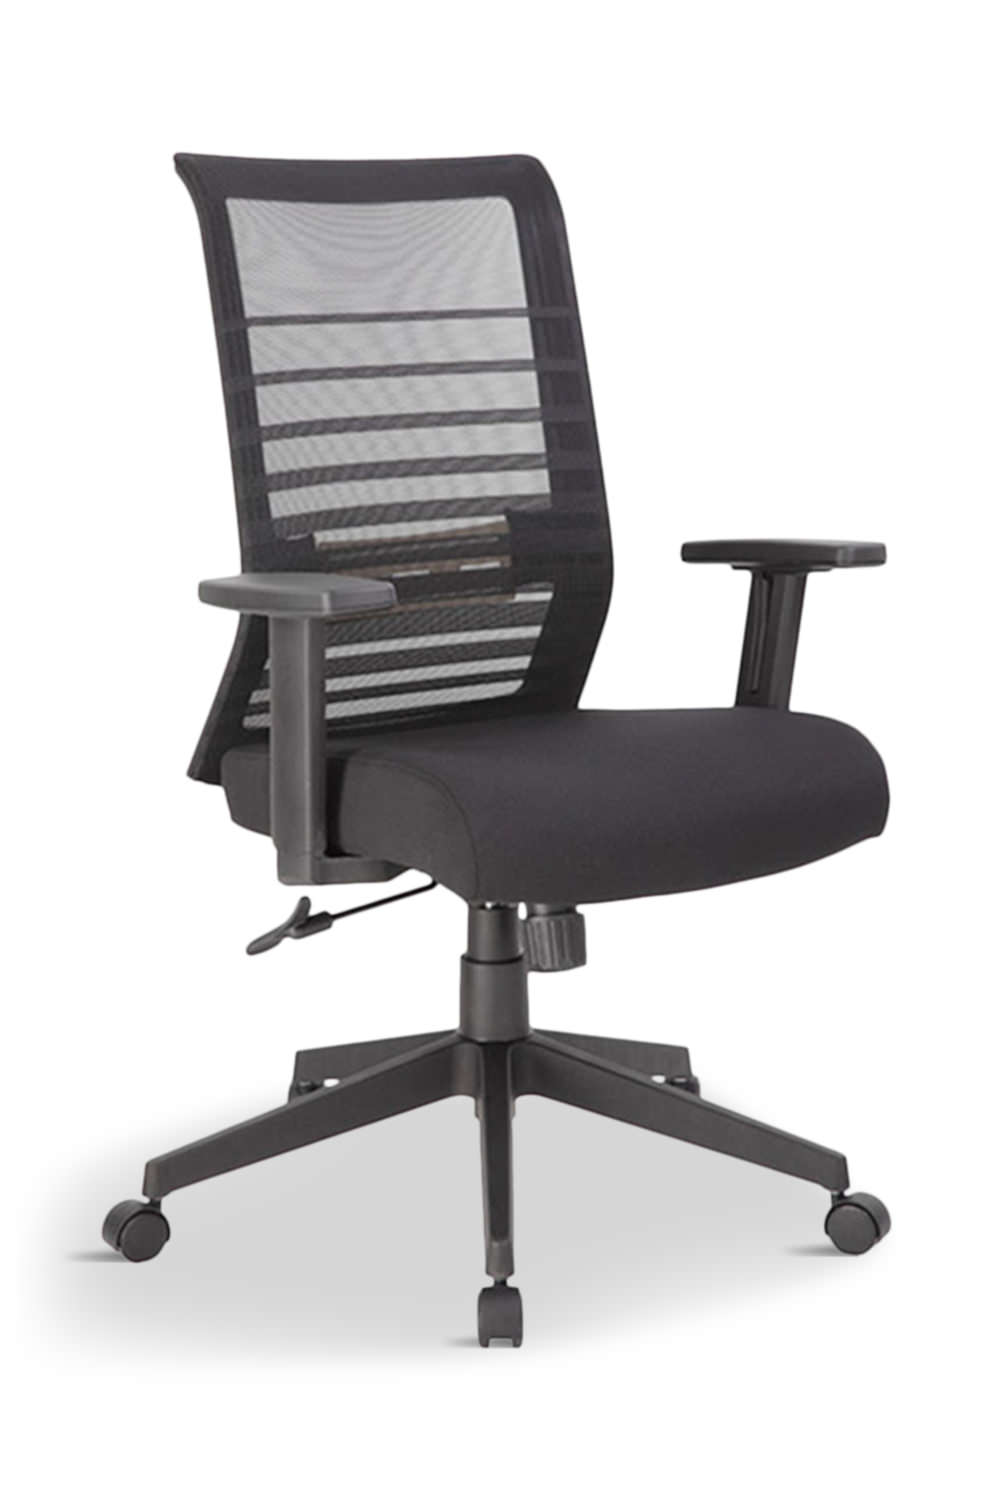 10 Stylish Ergonomic Office Chairs on Sale, Decor Trends & Design News